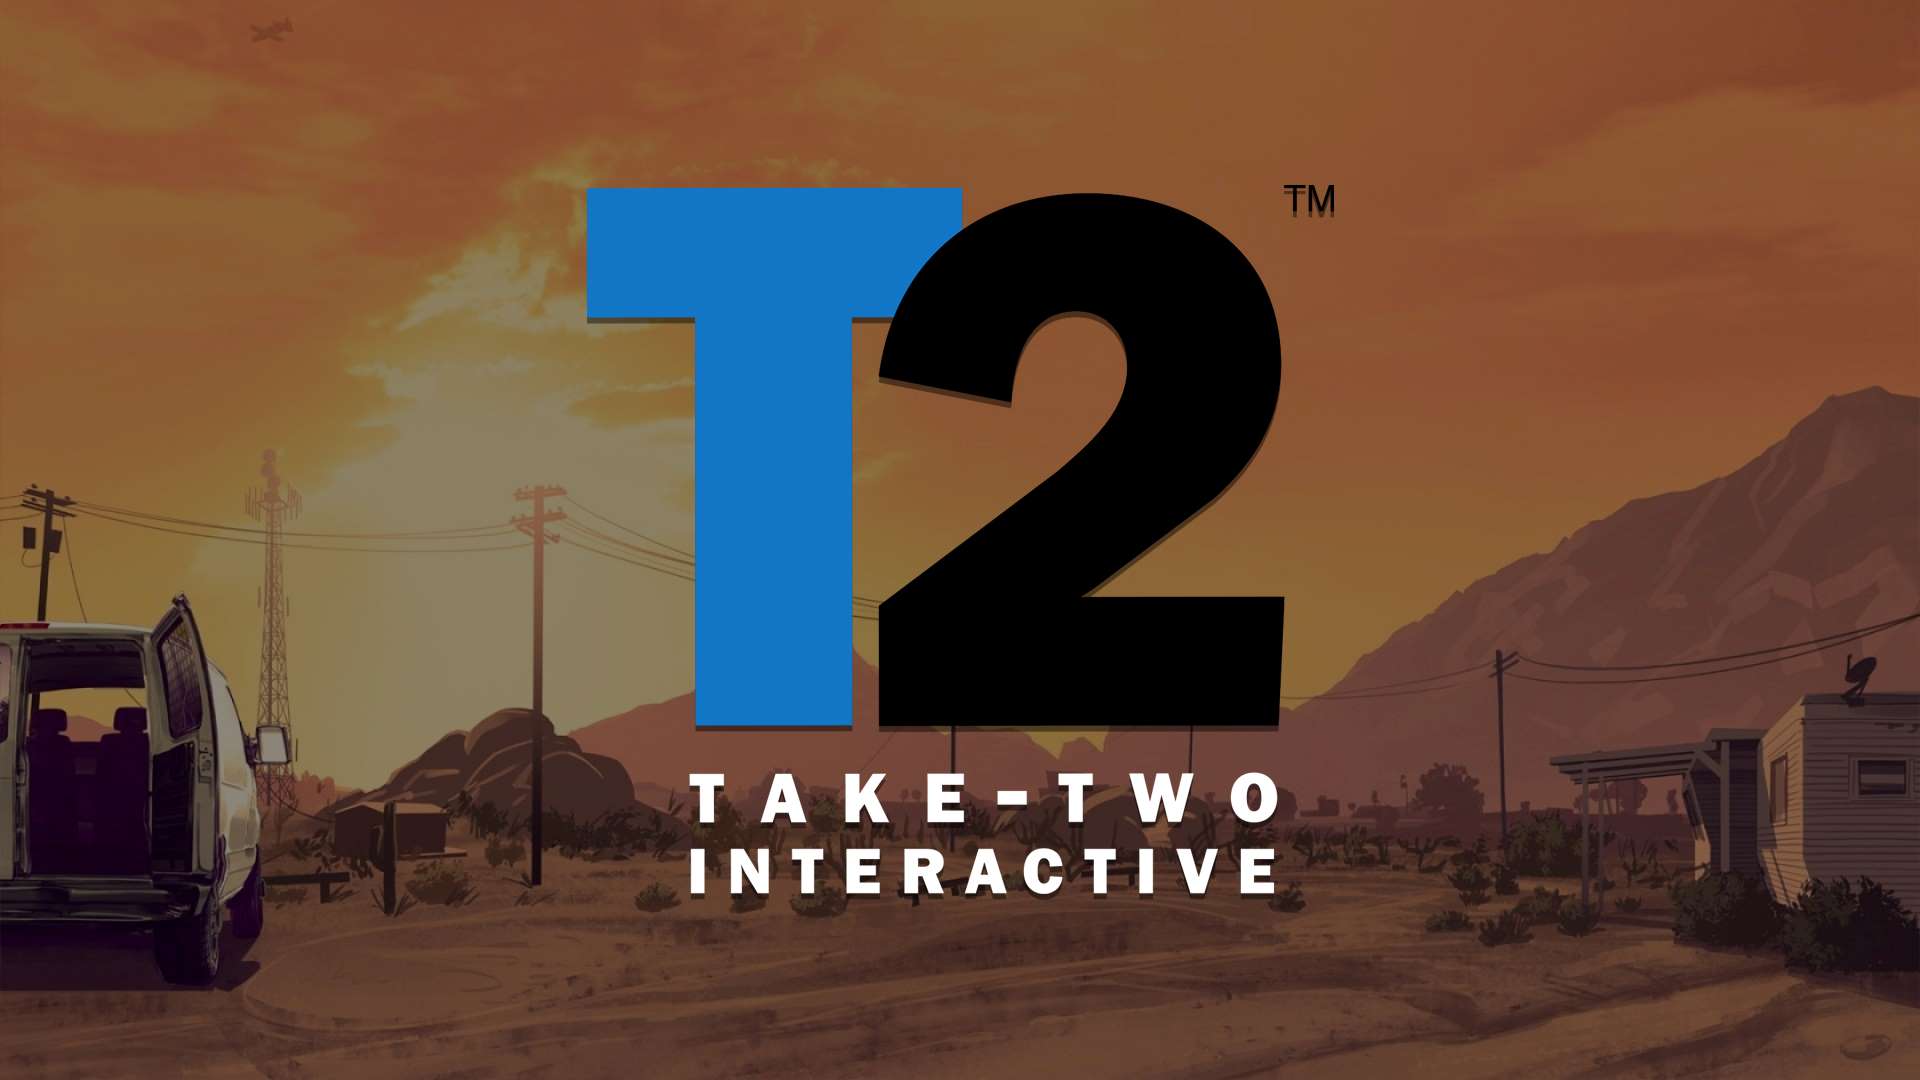 لوگوی شرکت Take-Two